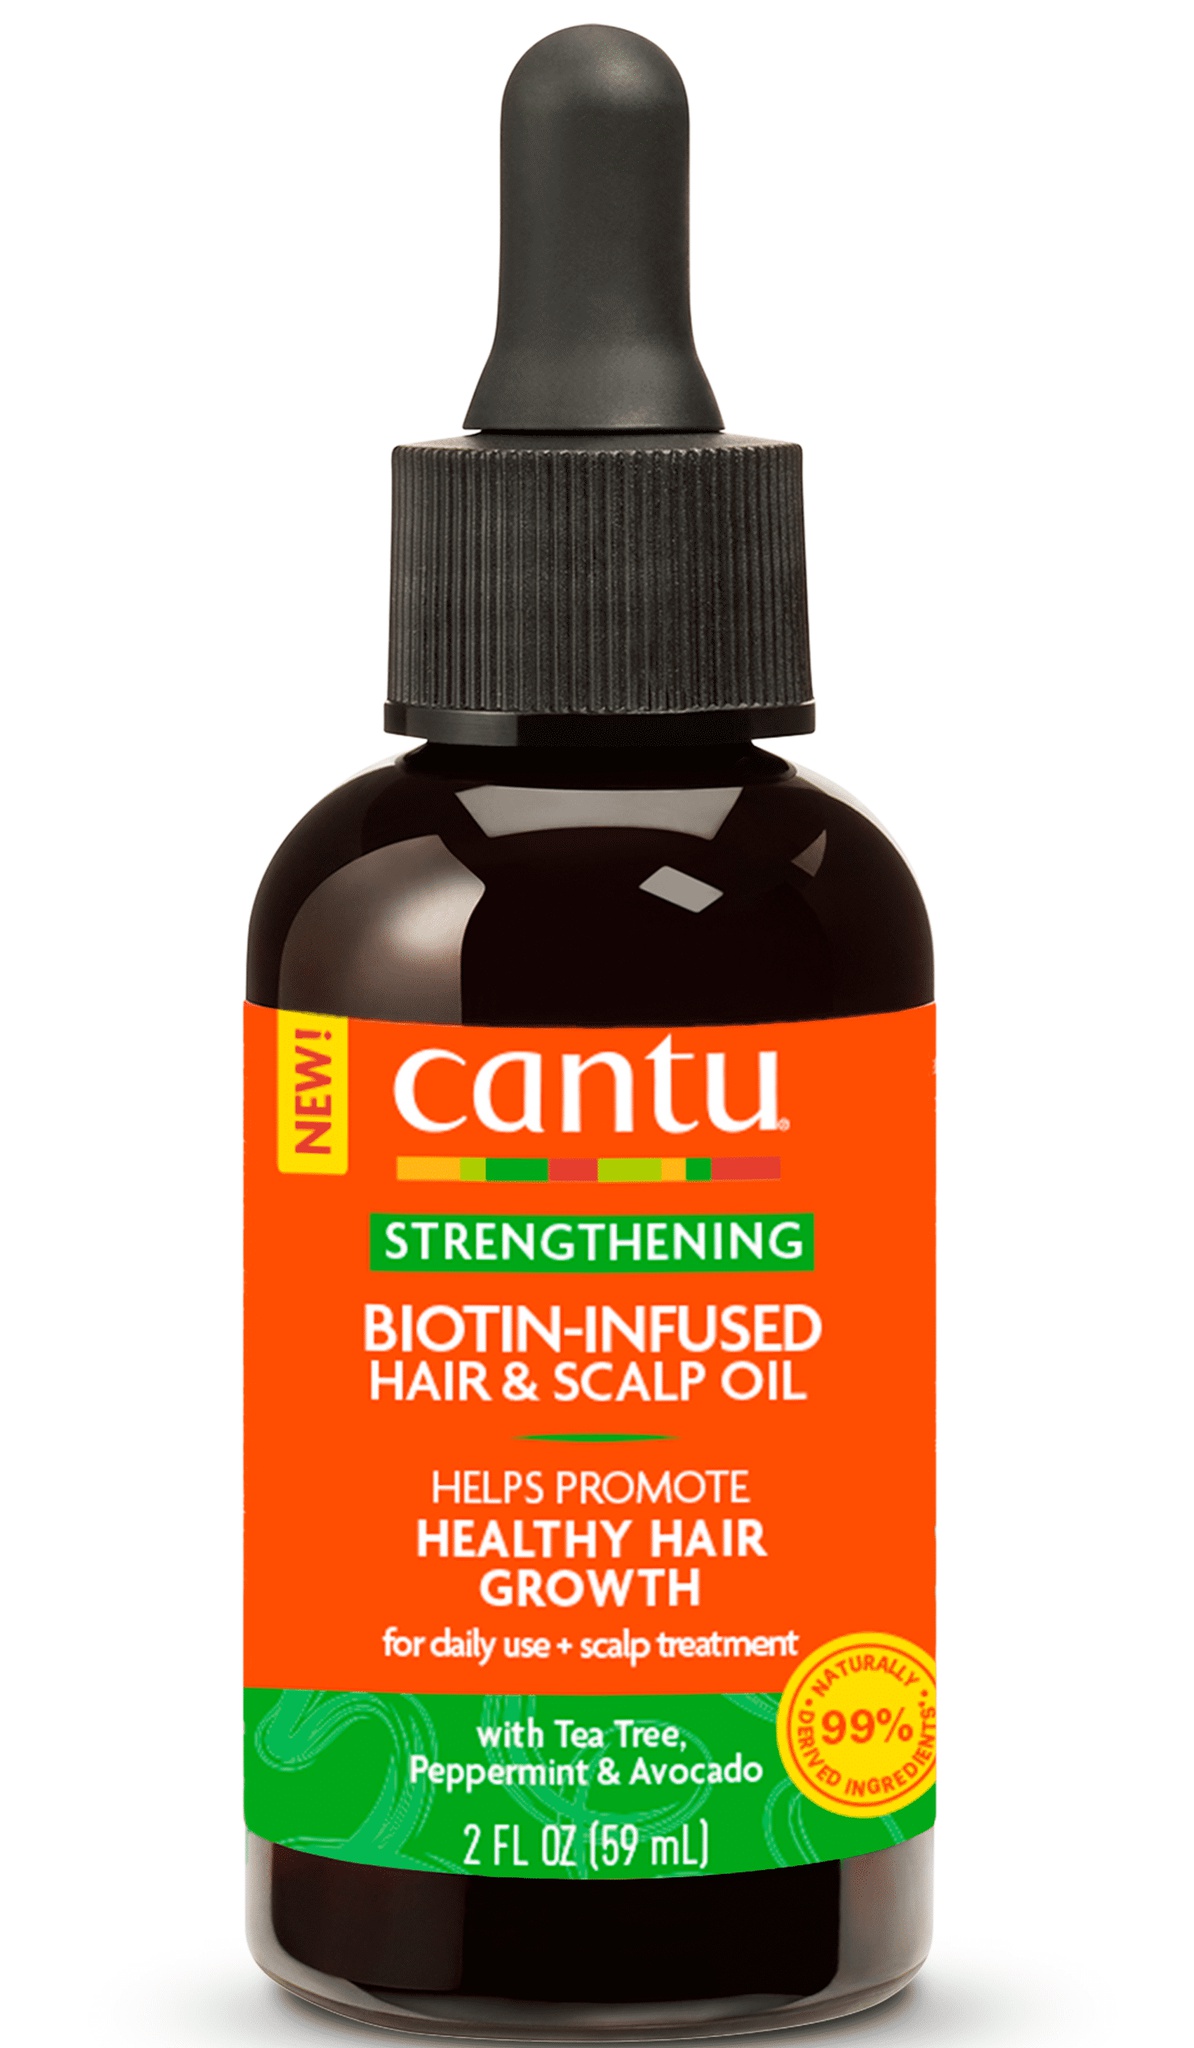 Cantu Shea Butter Biotin – Infused Hair & Scalp Oil